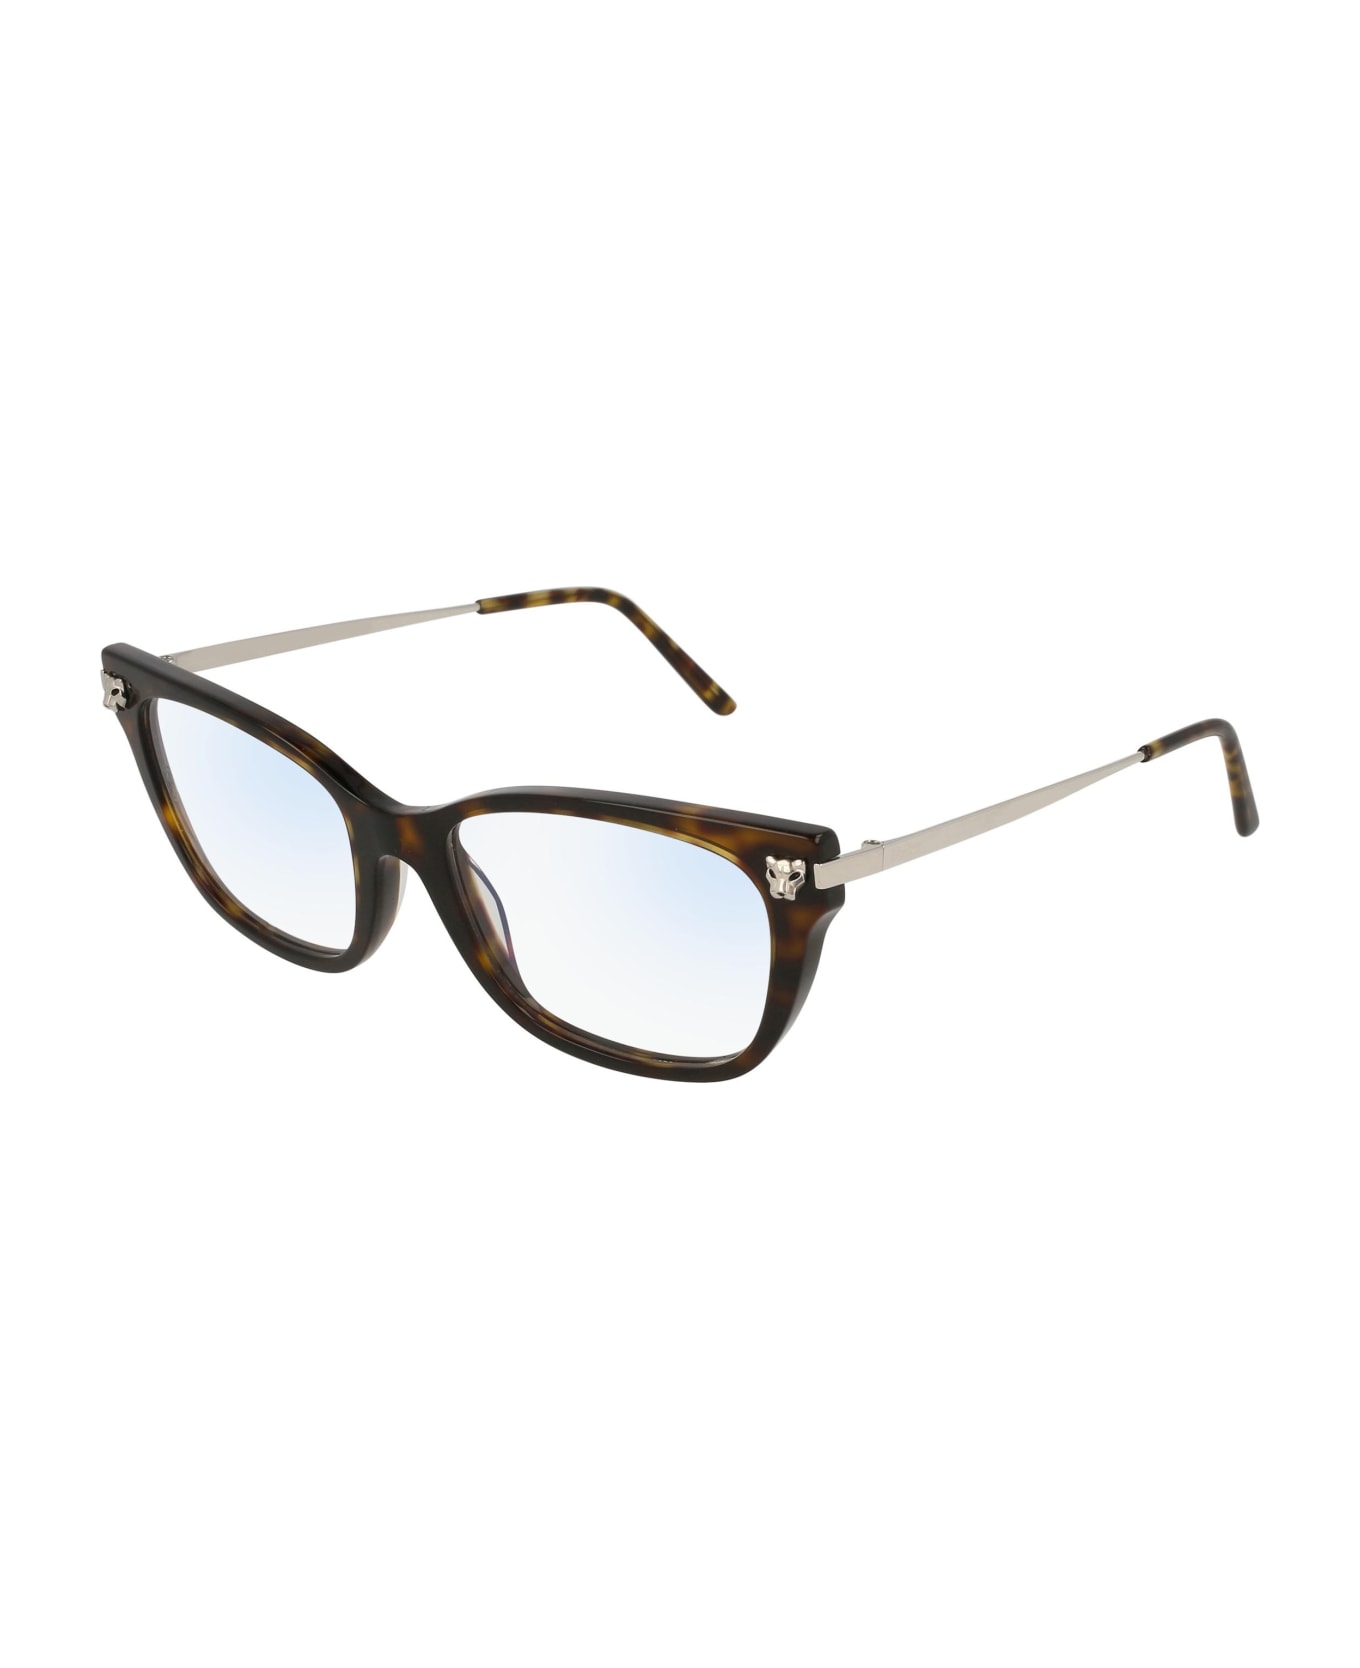 Cartier Eyewear Glasses - Marrone tartarugato